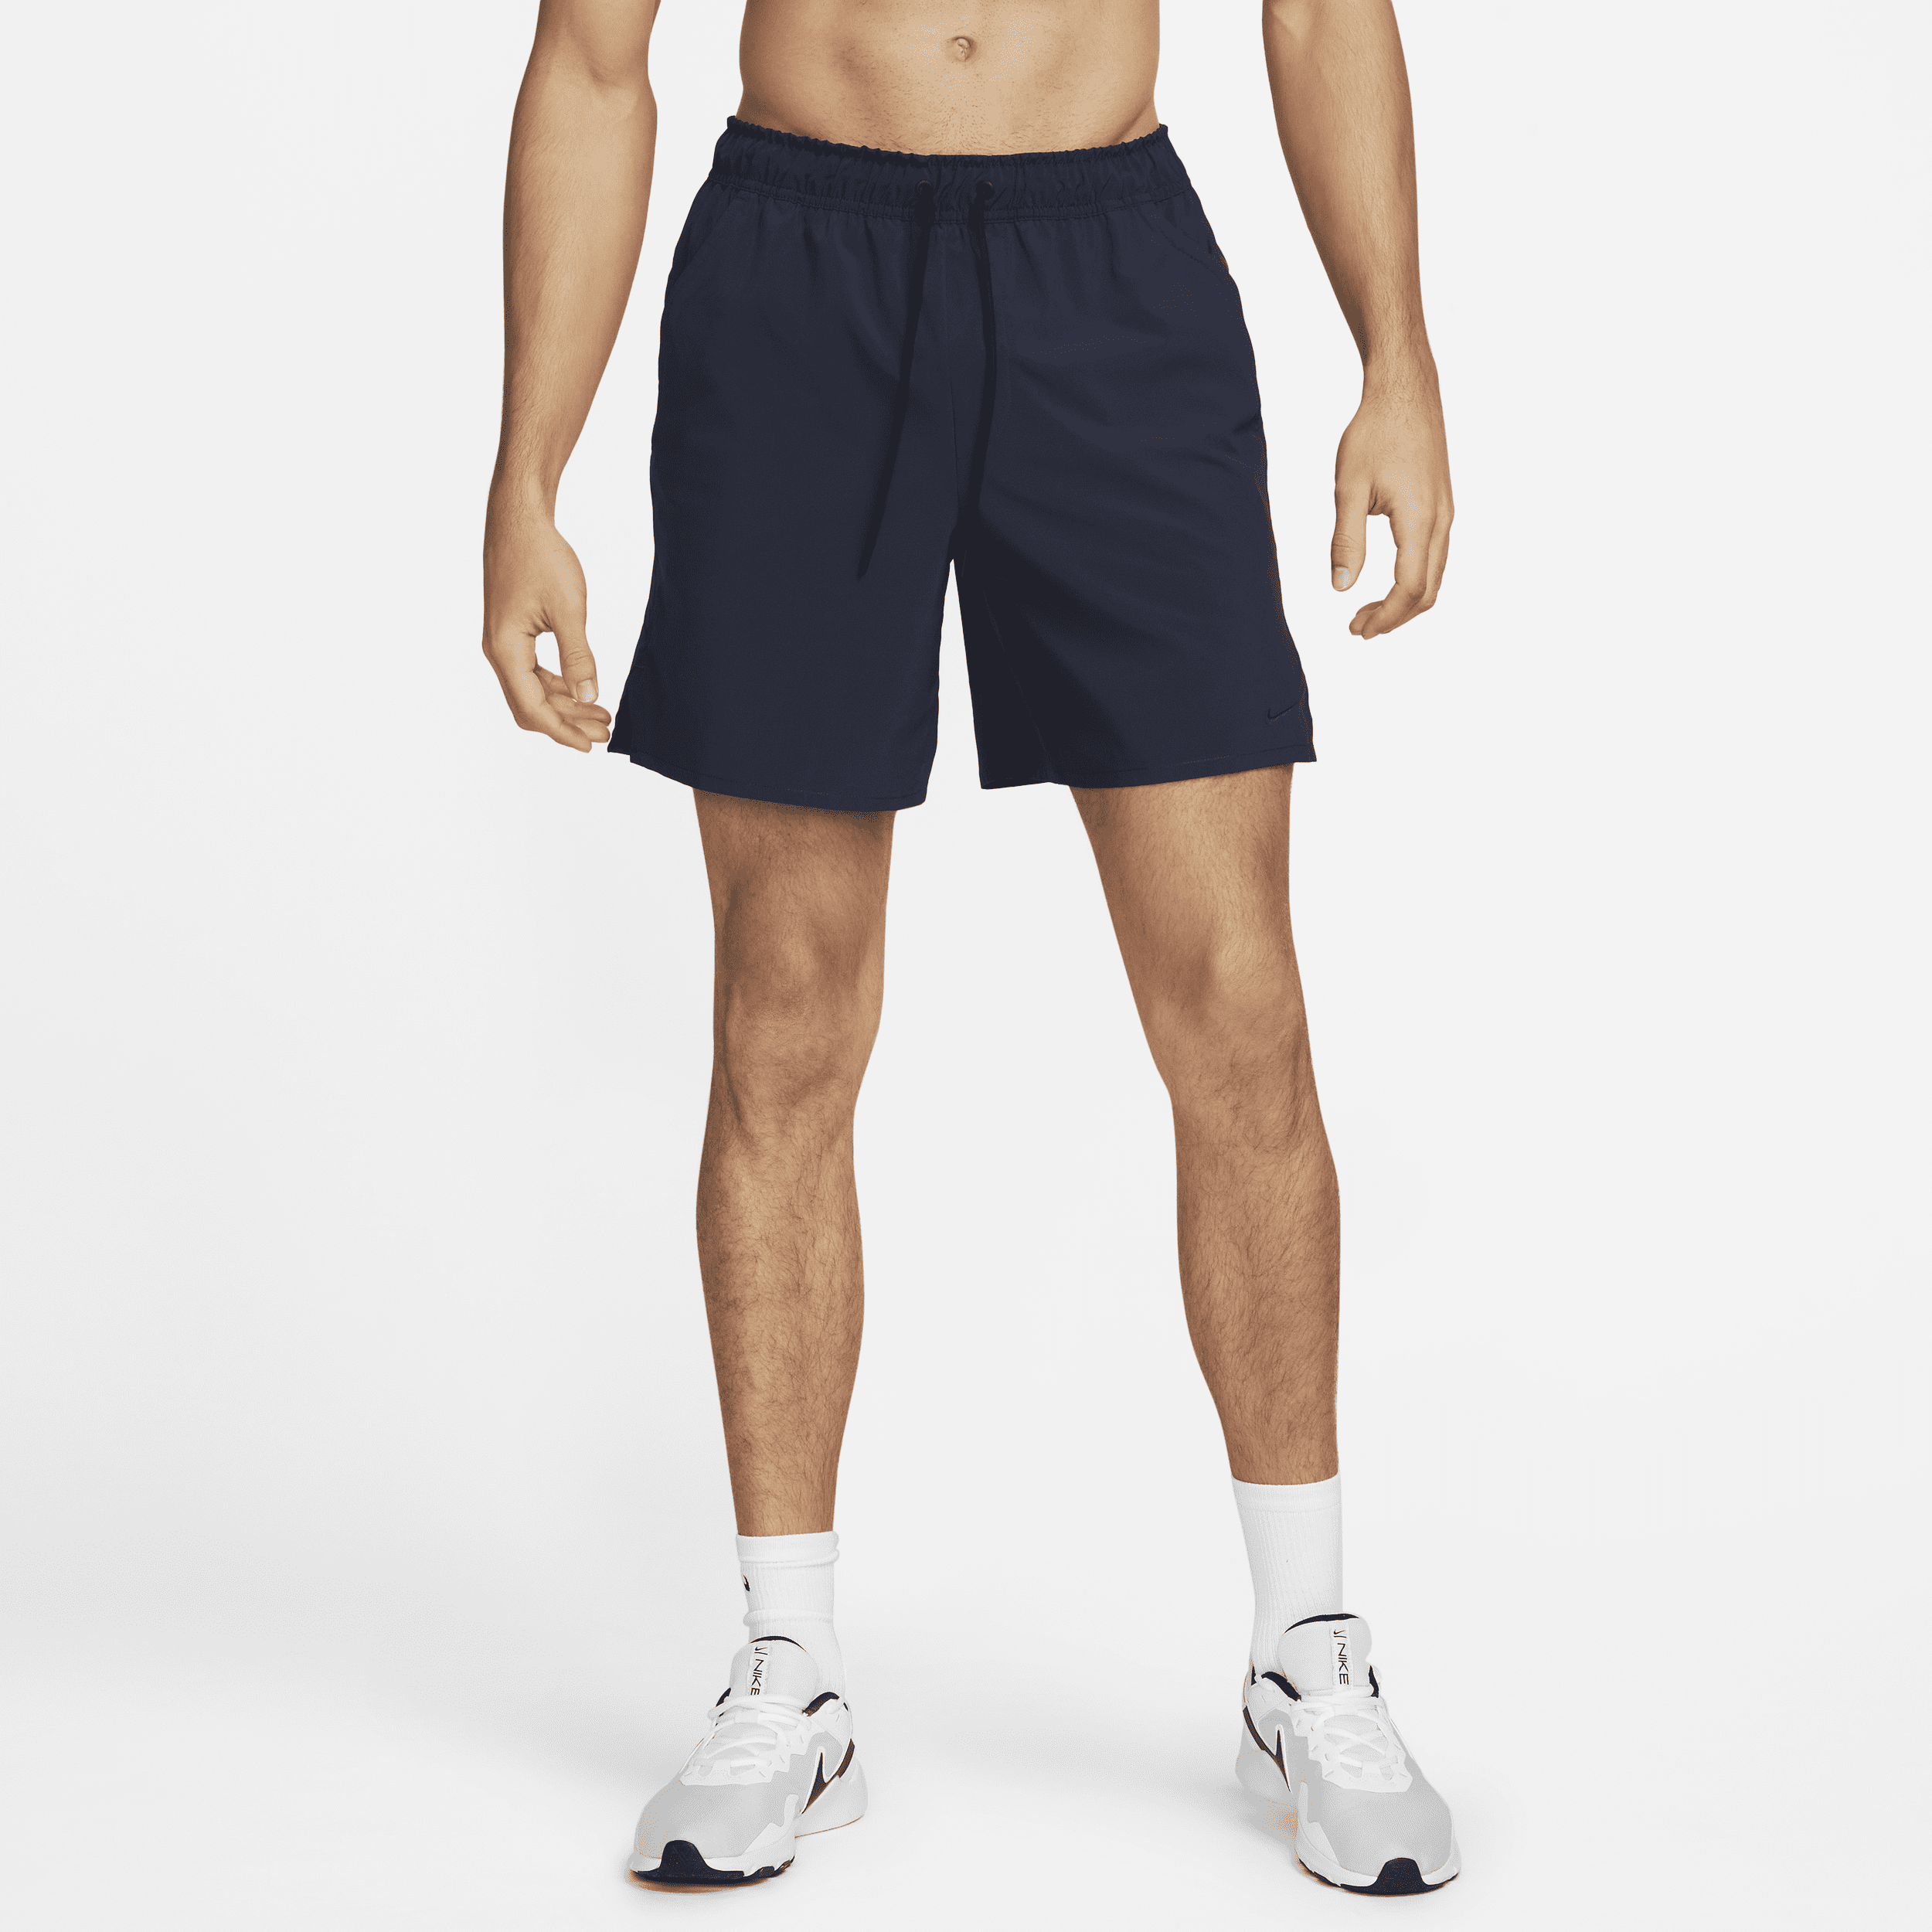 Shorts versatili Dri-FIT non foderati 18 cm Nike Unlimited – Uomo - Blu